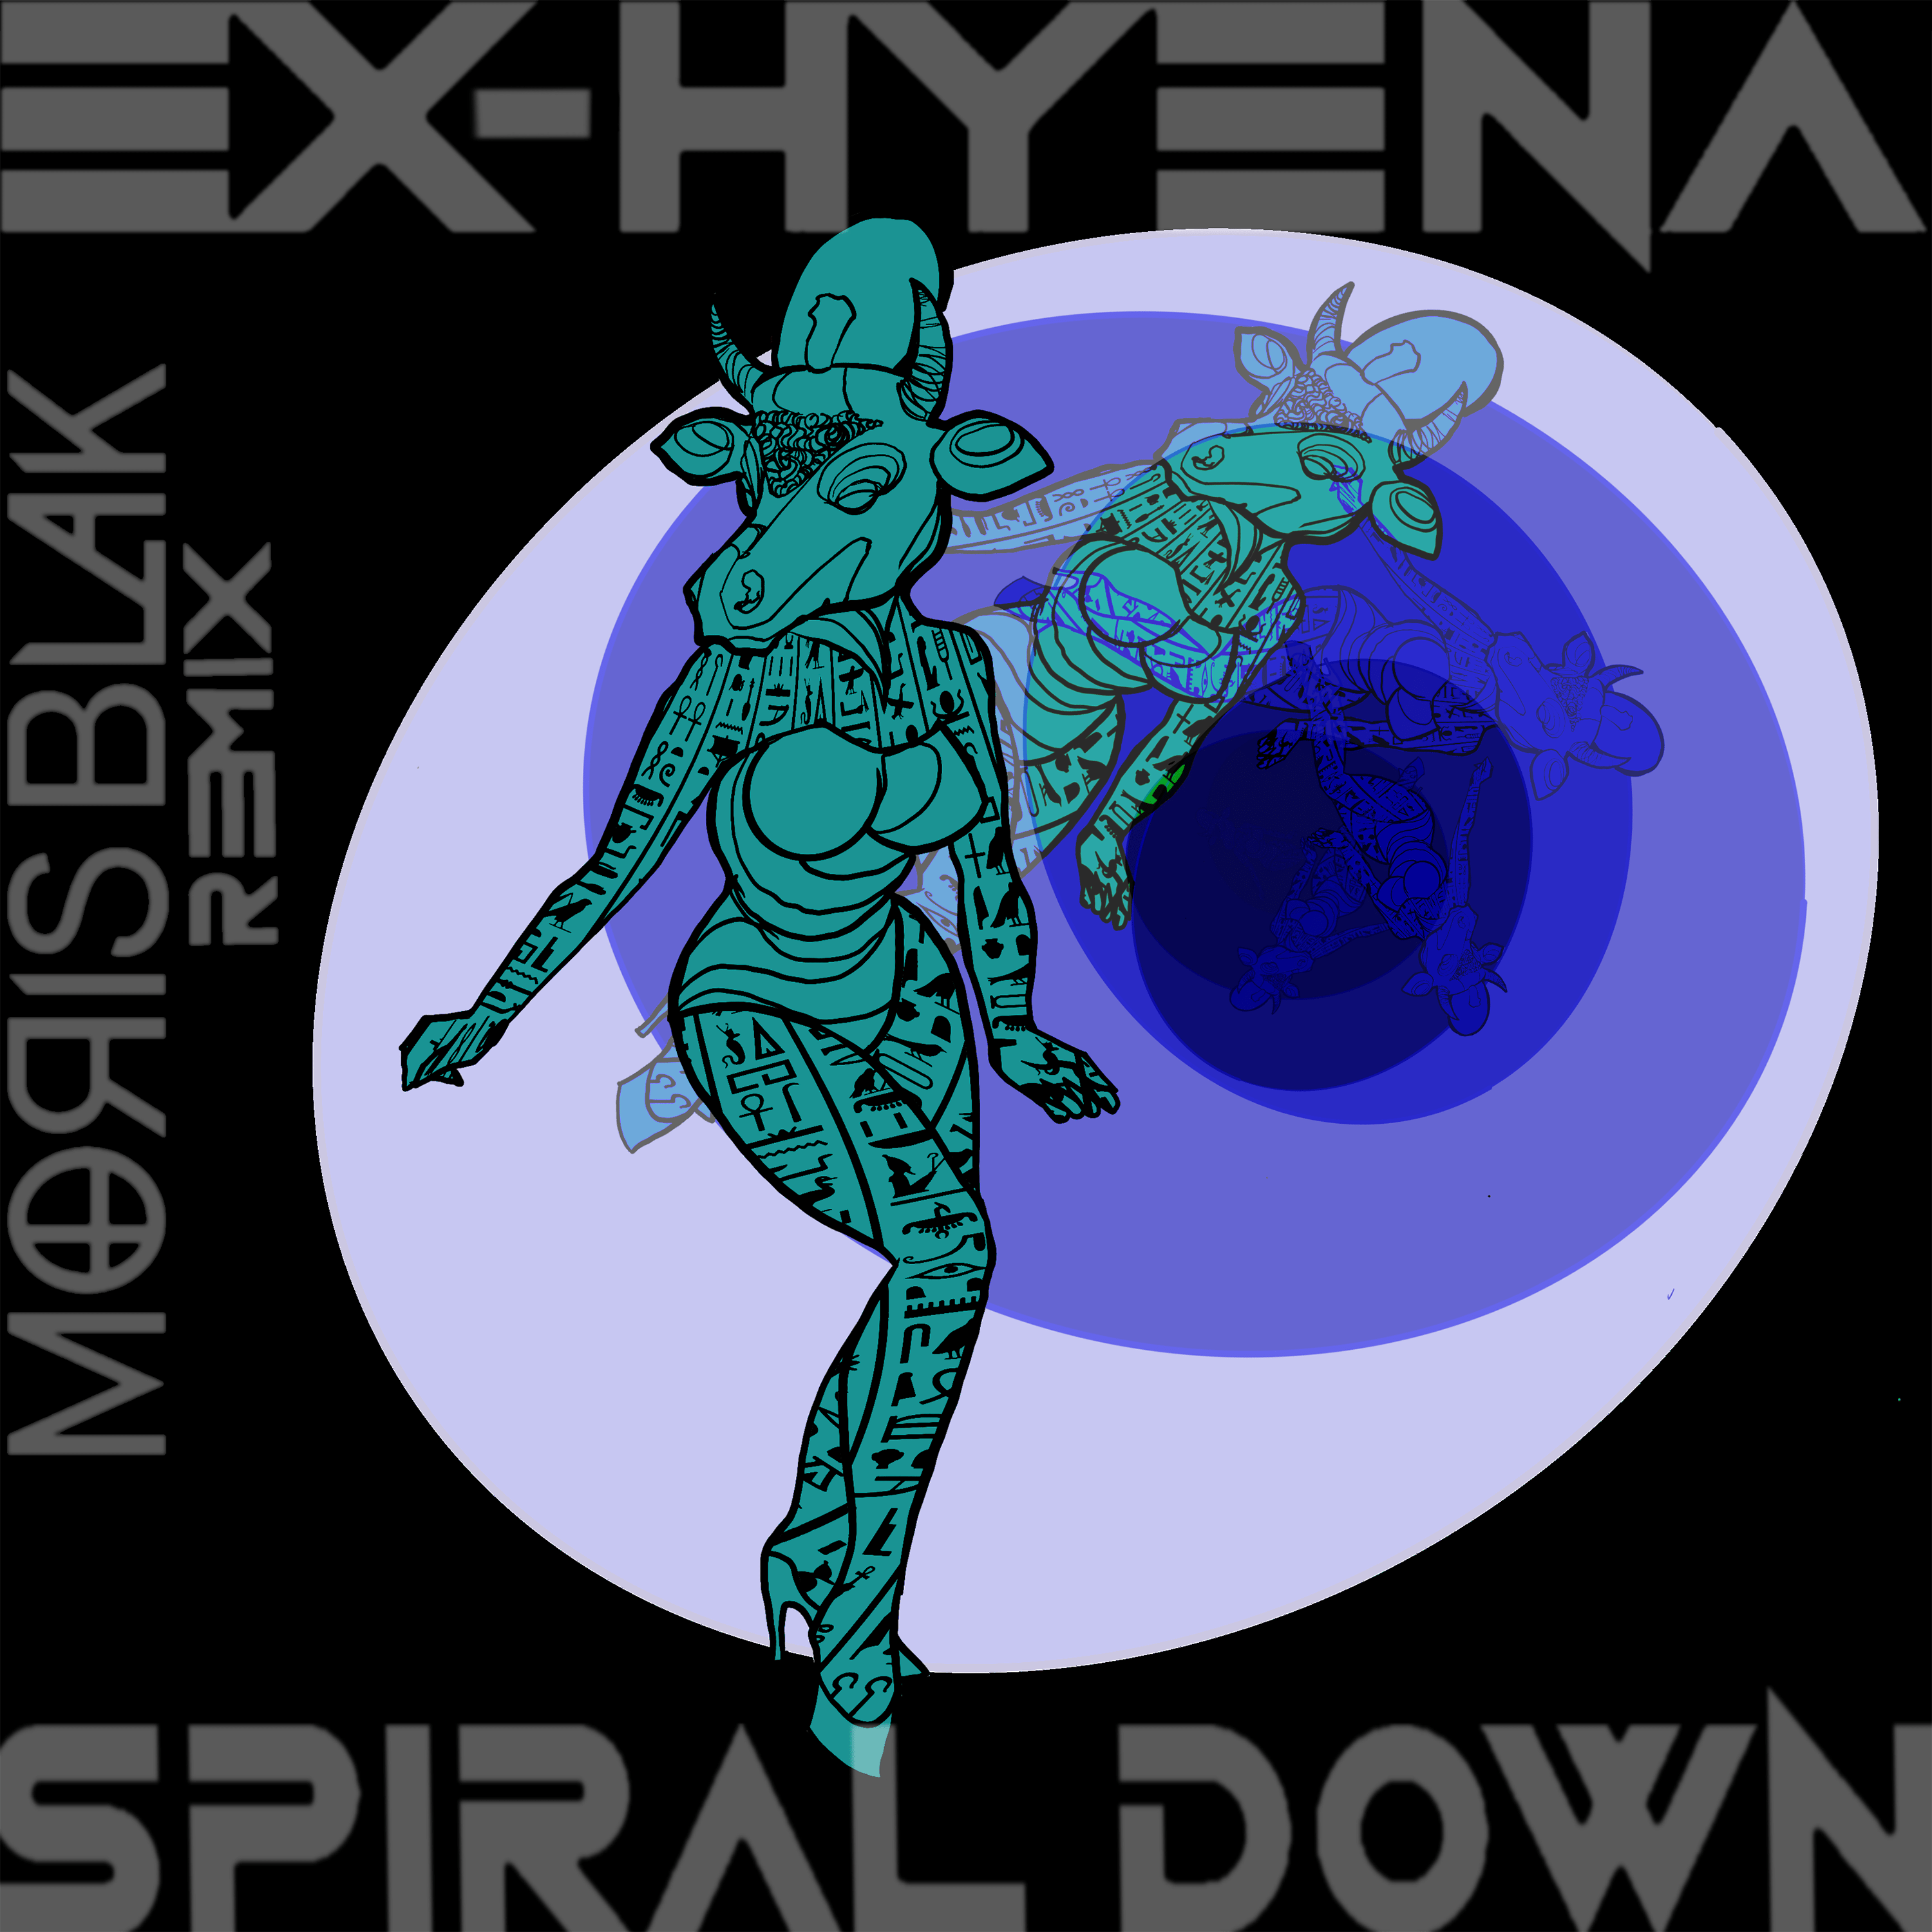 Dark Electronic Music Duo Ex-Hyena Debut Dance-Driven Video for the MORIS BLAK Remix of “Spiral Down”